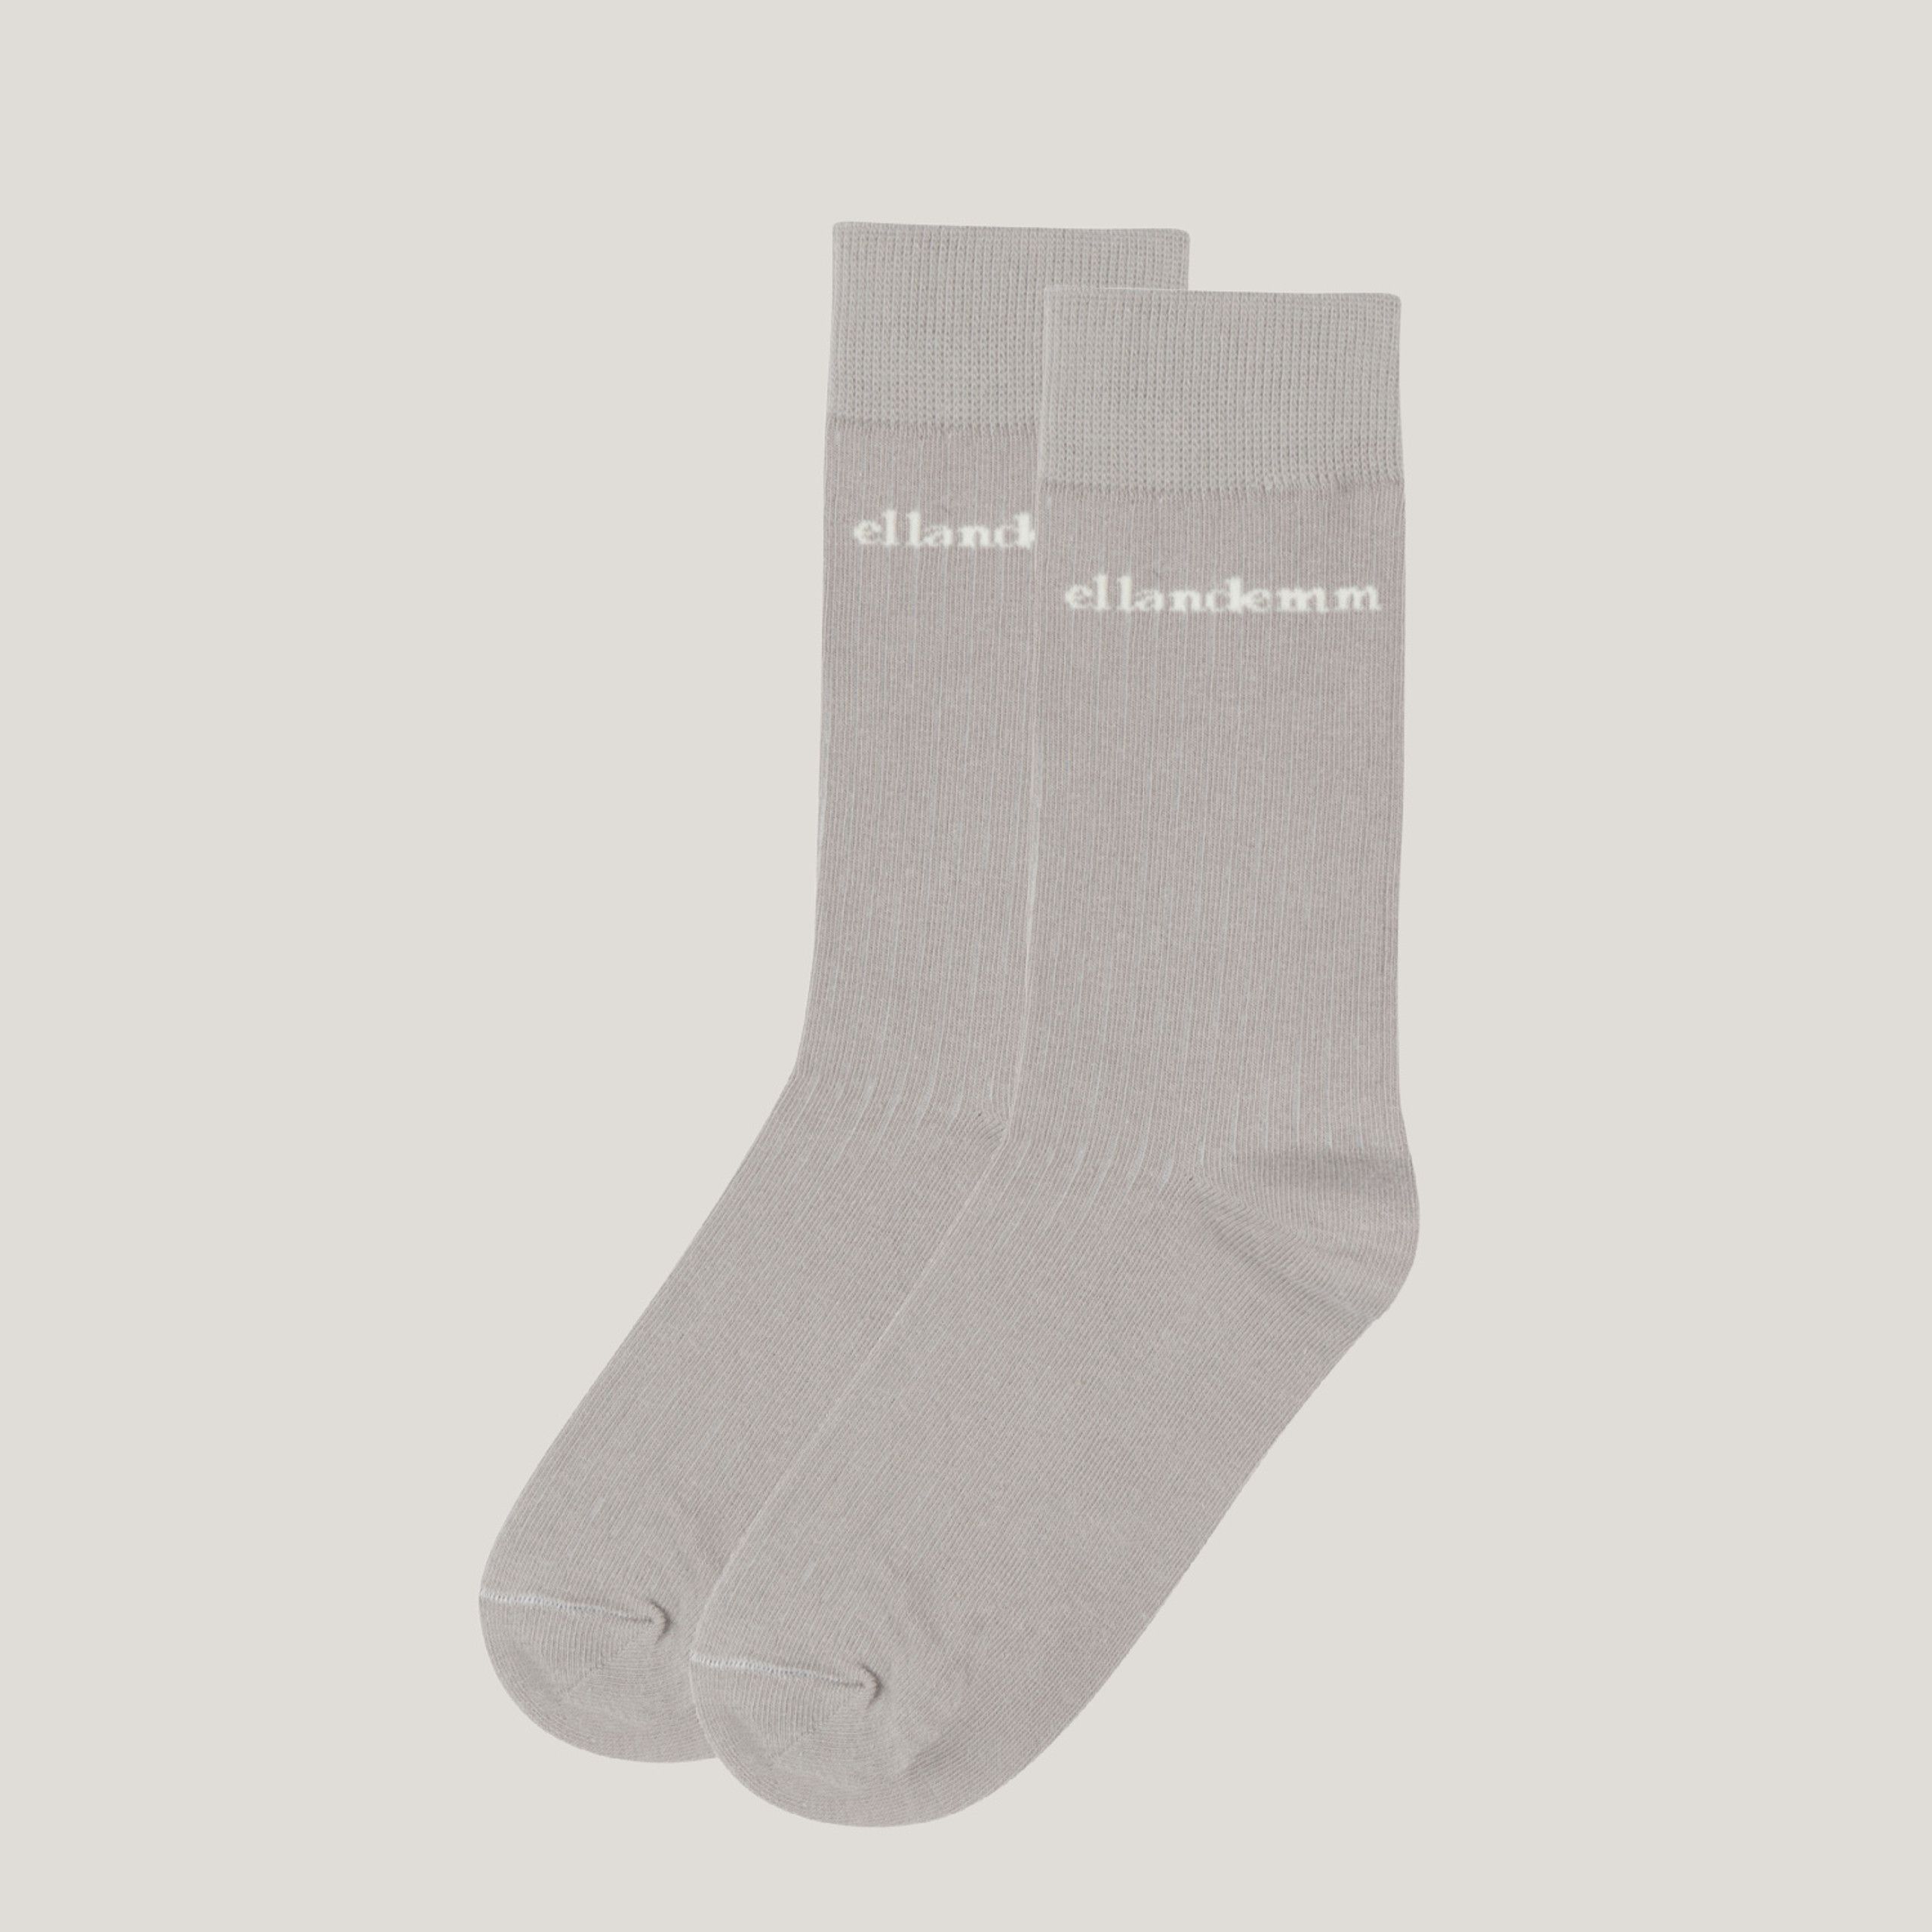 EllandEmm Socks - 2 Pack | EllandEmm